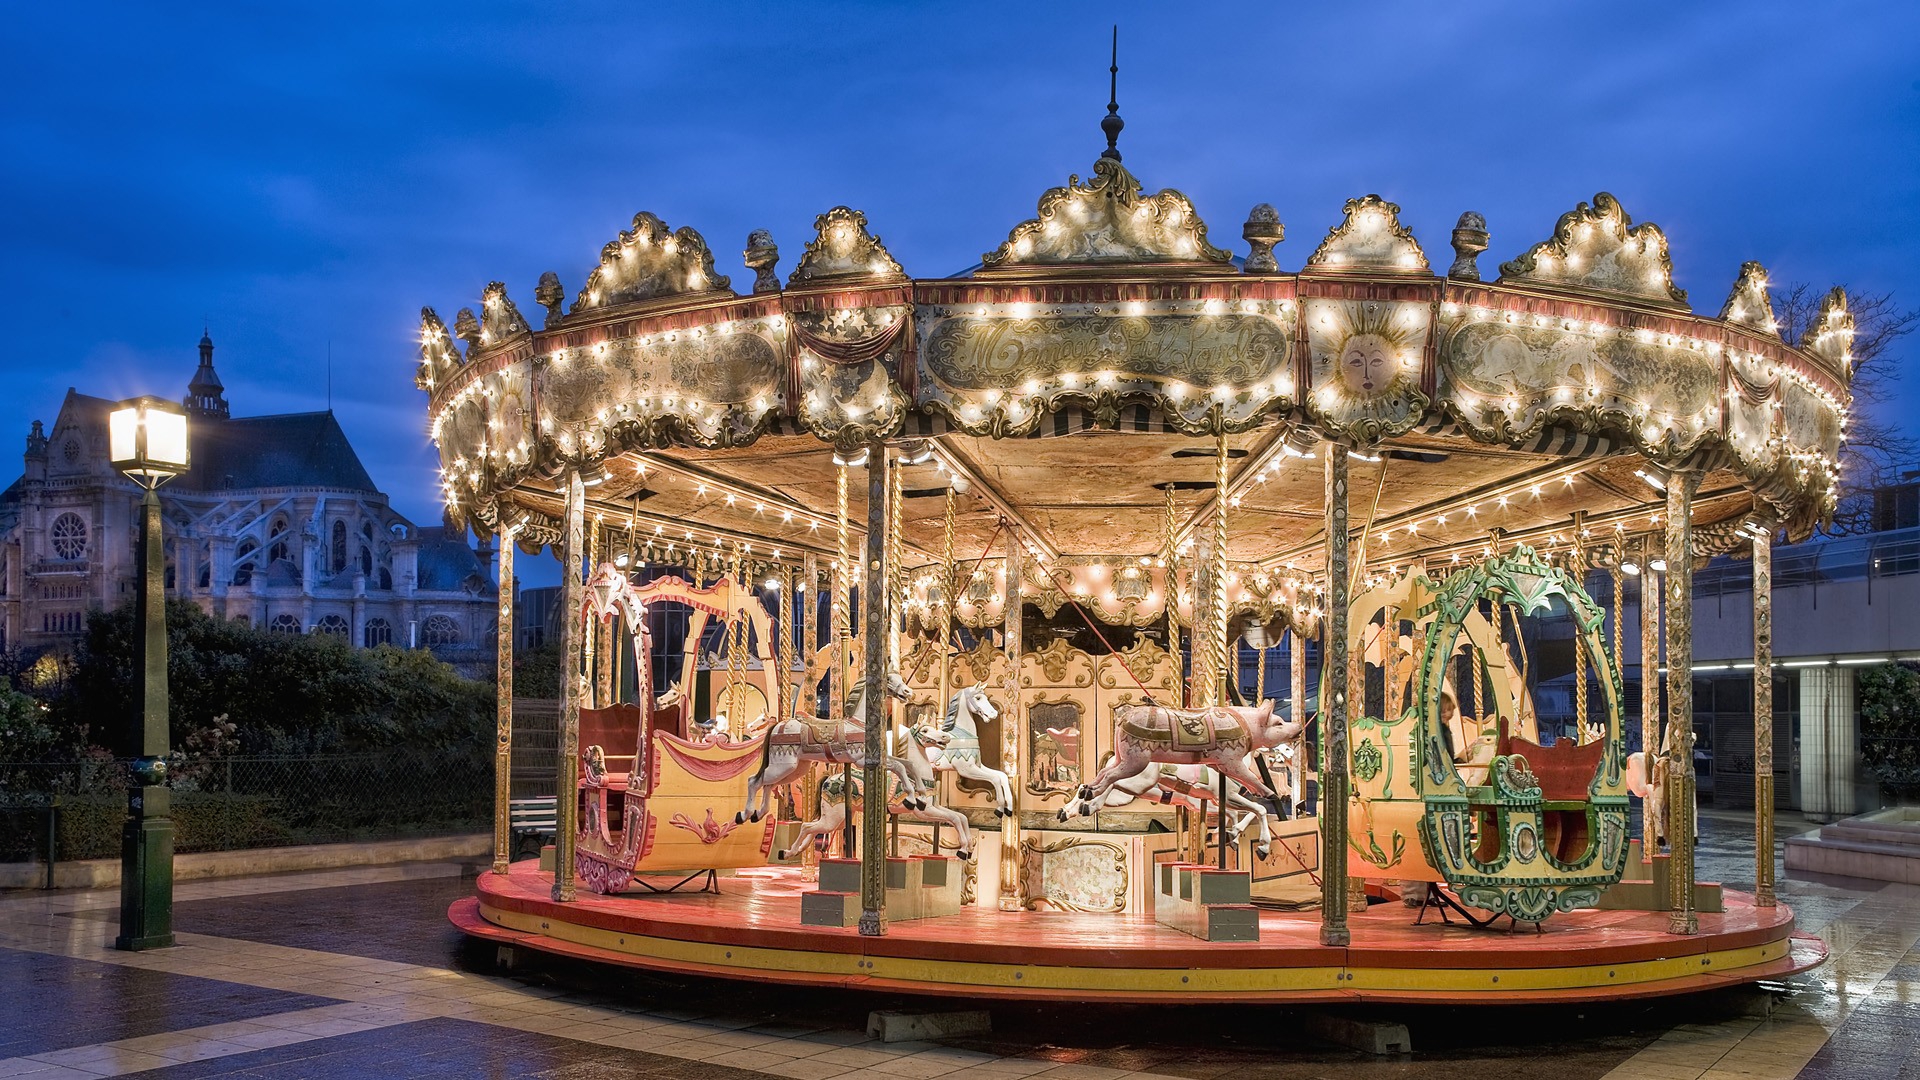 Paris Merry Go Round Carousel Horse 1920x1080